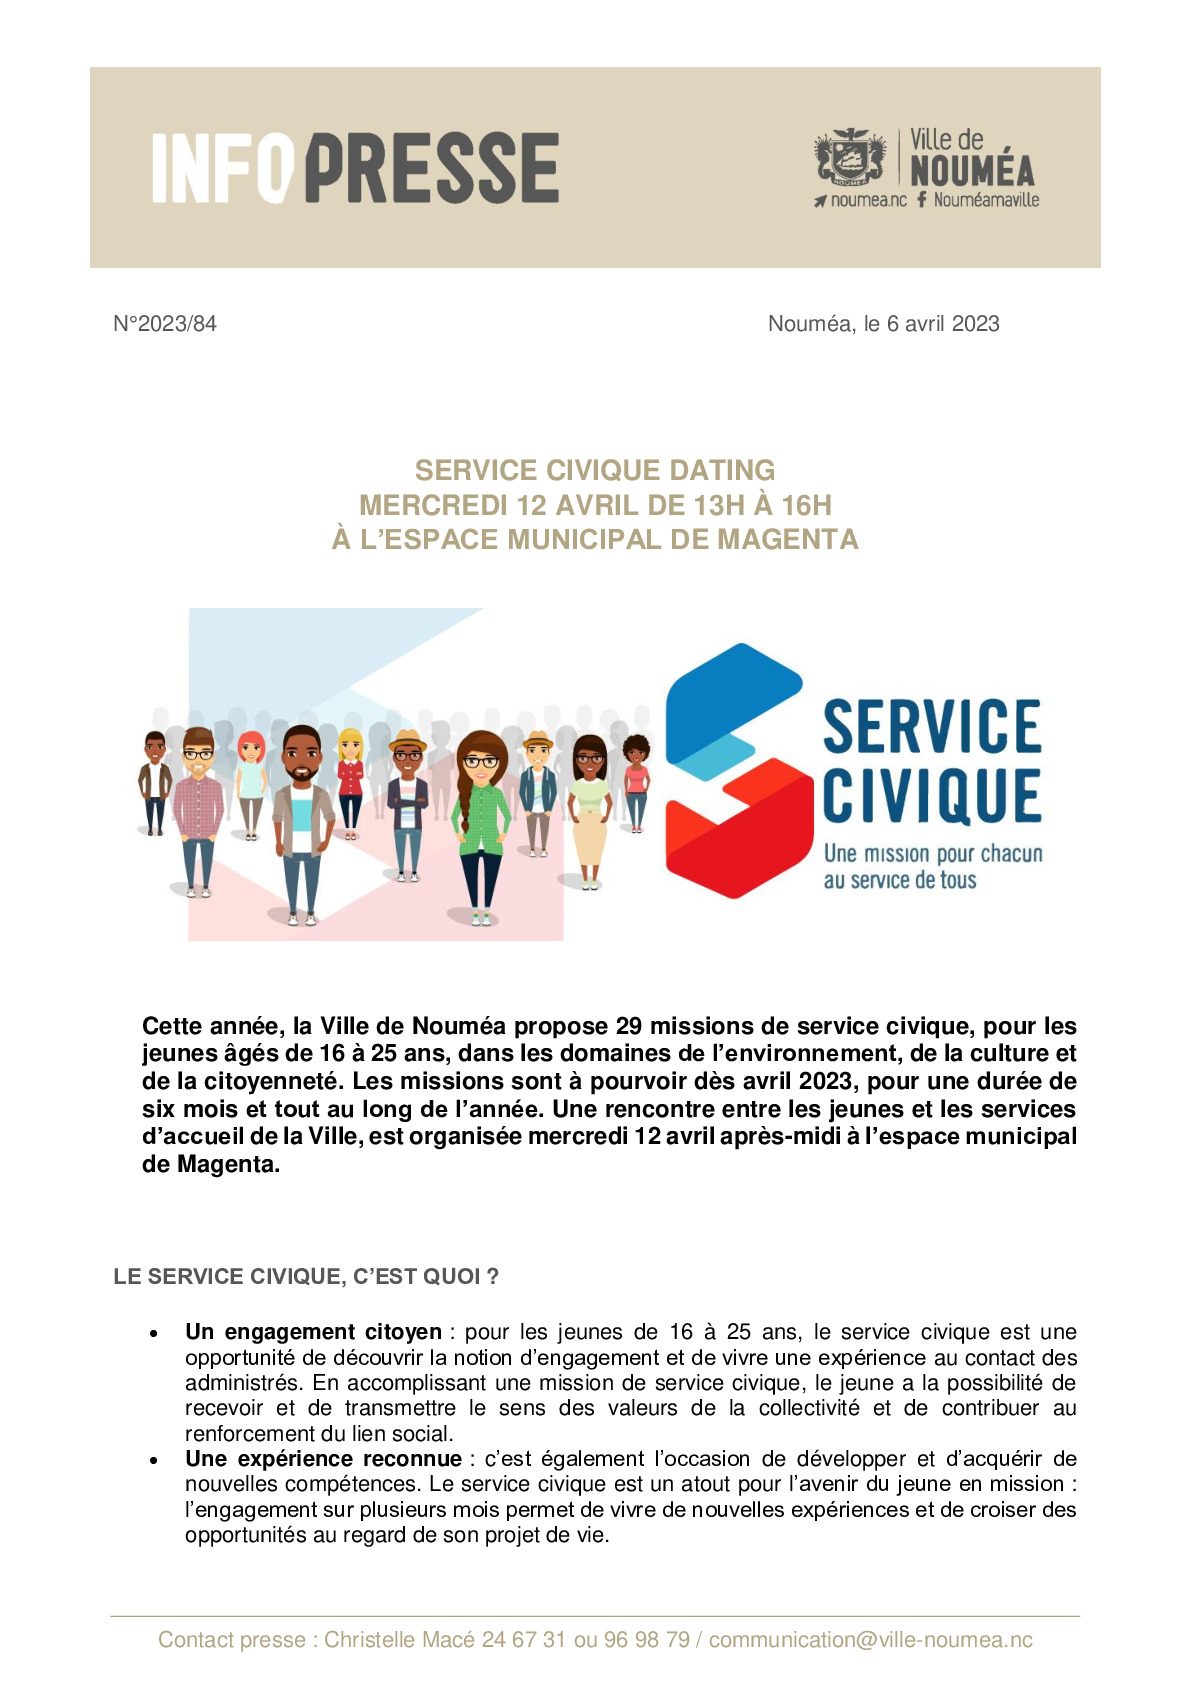 IP 84 Service civique dating  2023.pdf